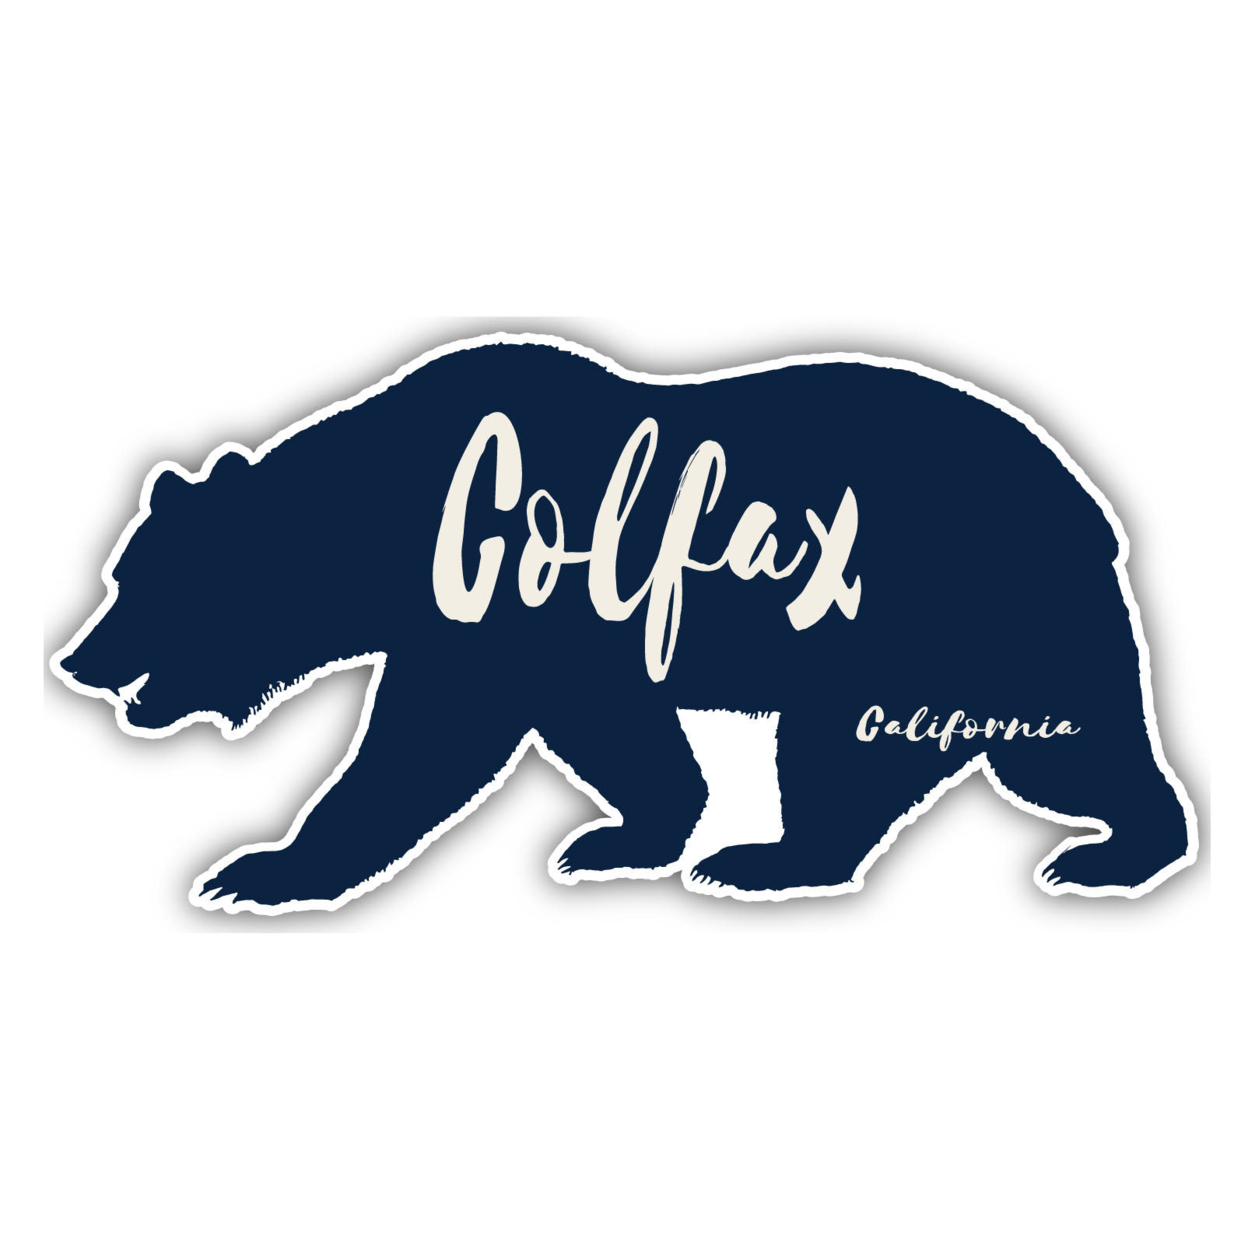 Colfax California Souvenir Decorative Stickers (Choose Theme And Size) - Single Unit, 4-Inch, Bear